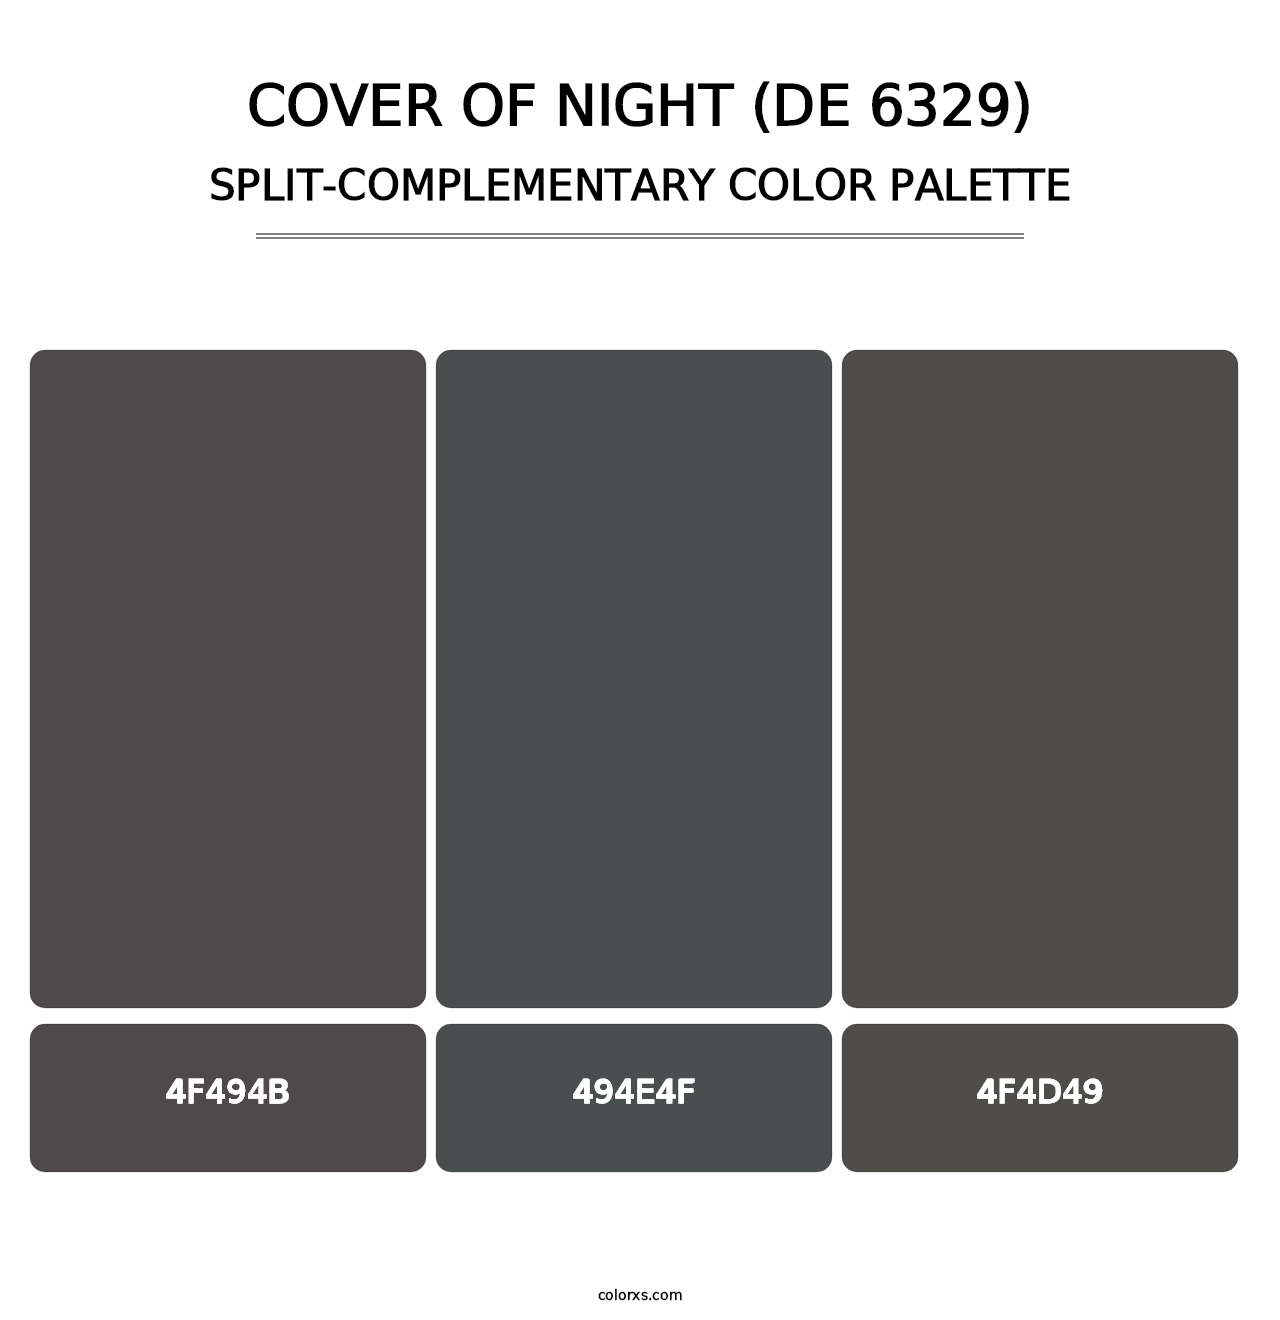 Cover of Night (DE 6329) - Split-Complementary Color Palette